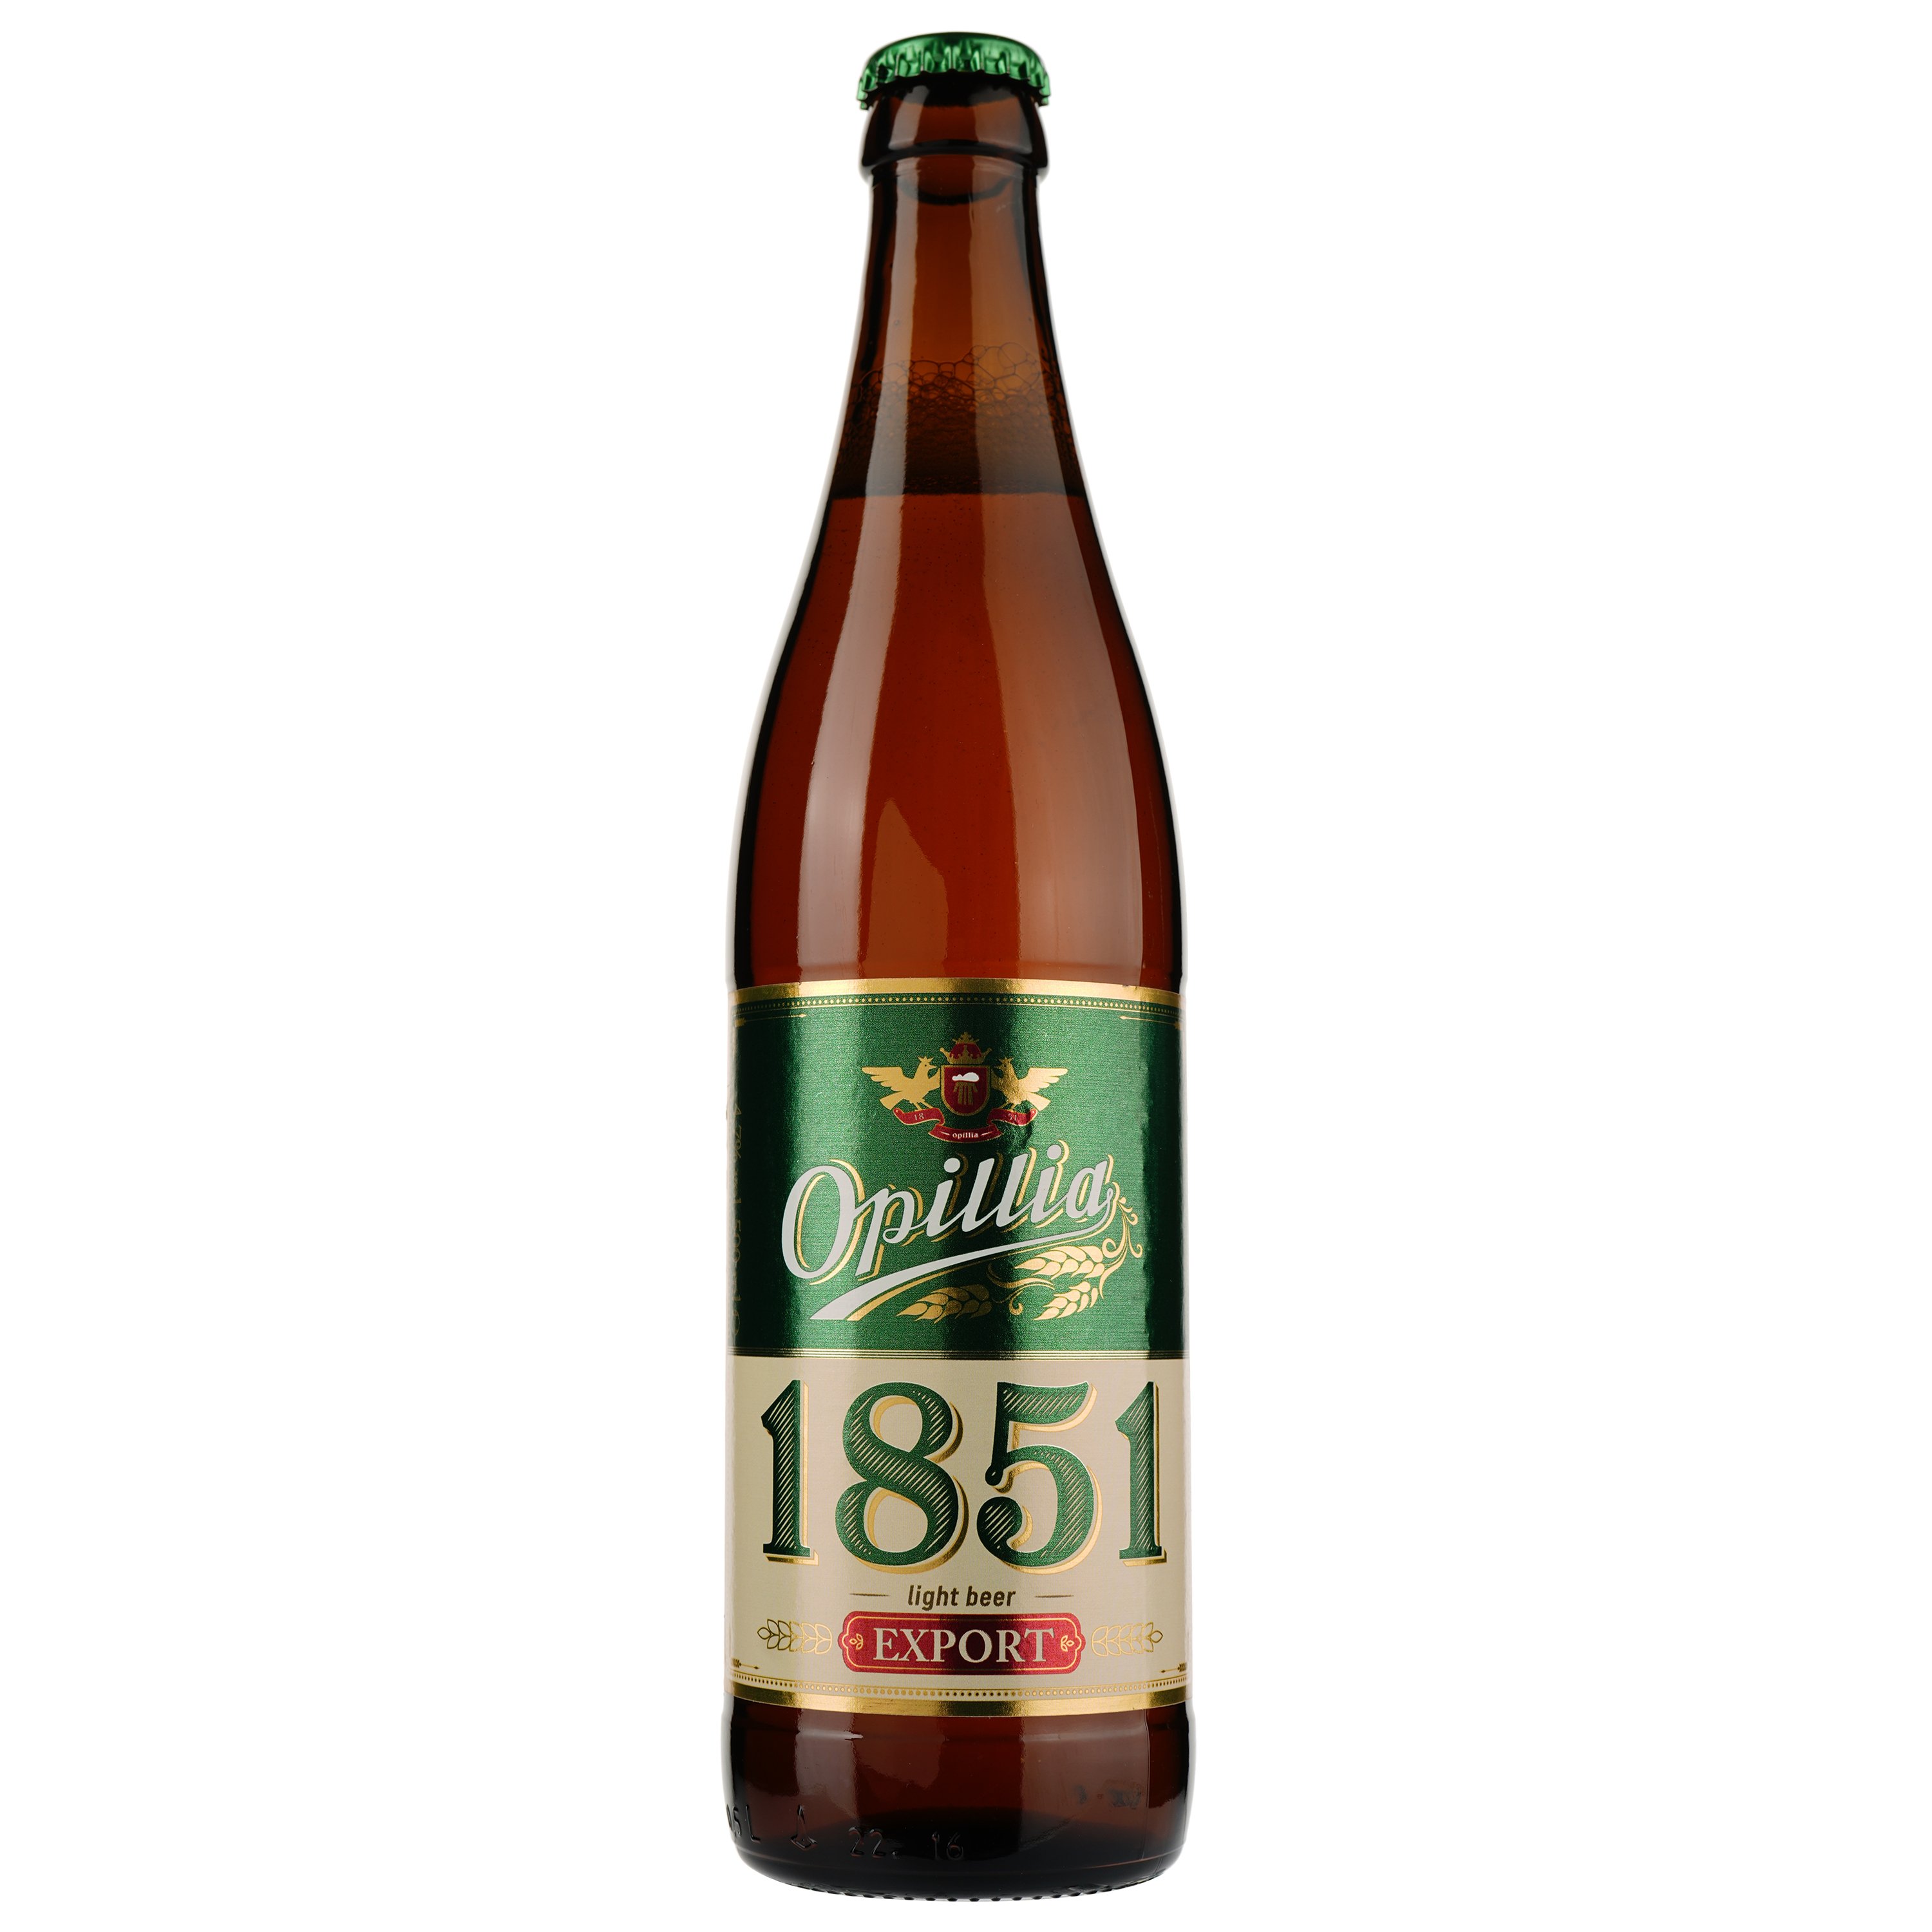 Пиво Опілля Export 1851, 4,7%, 0,5 л (874996) - фото 1